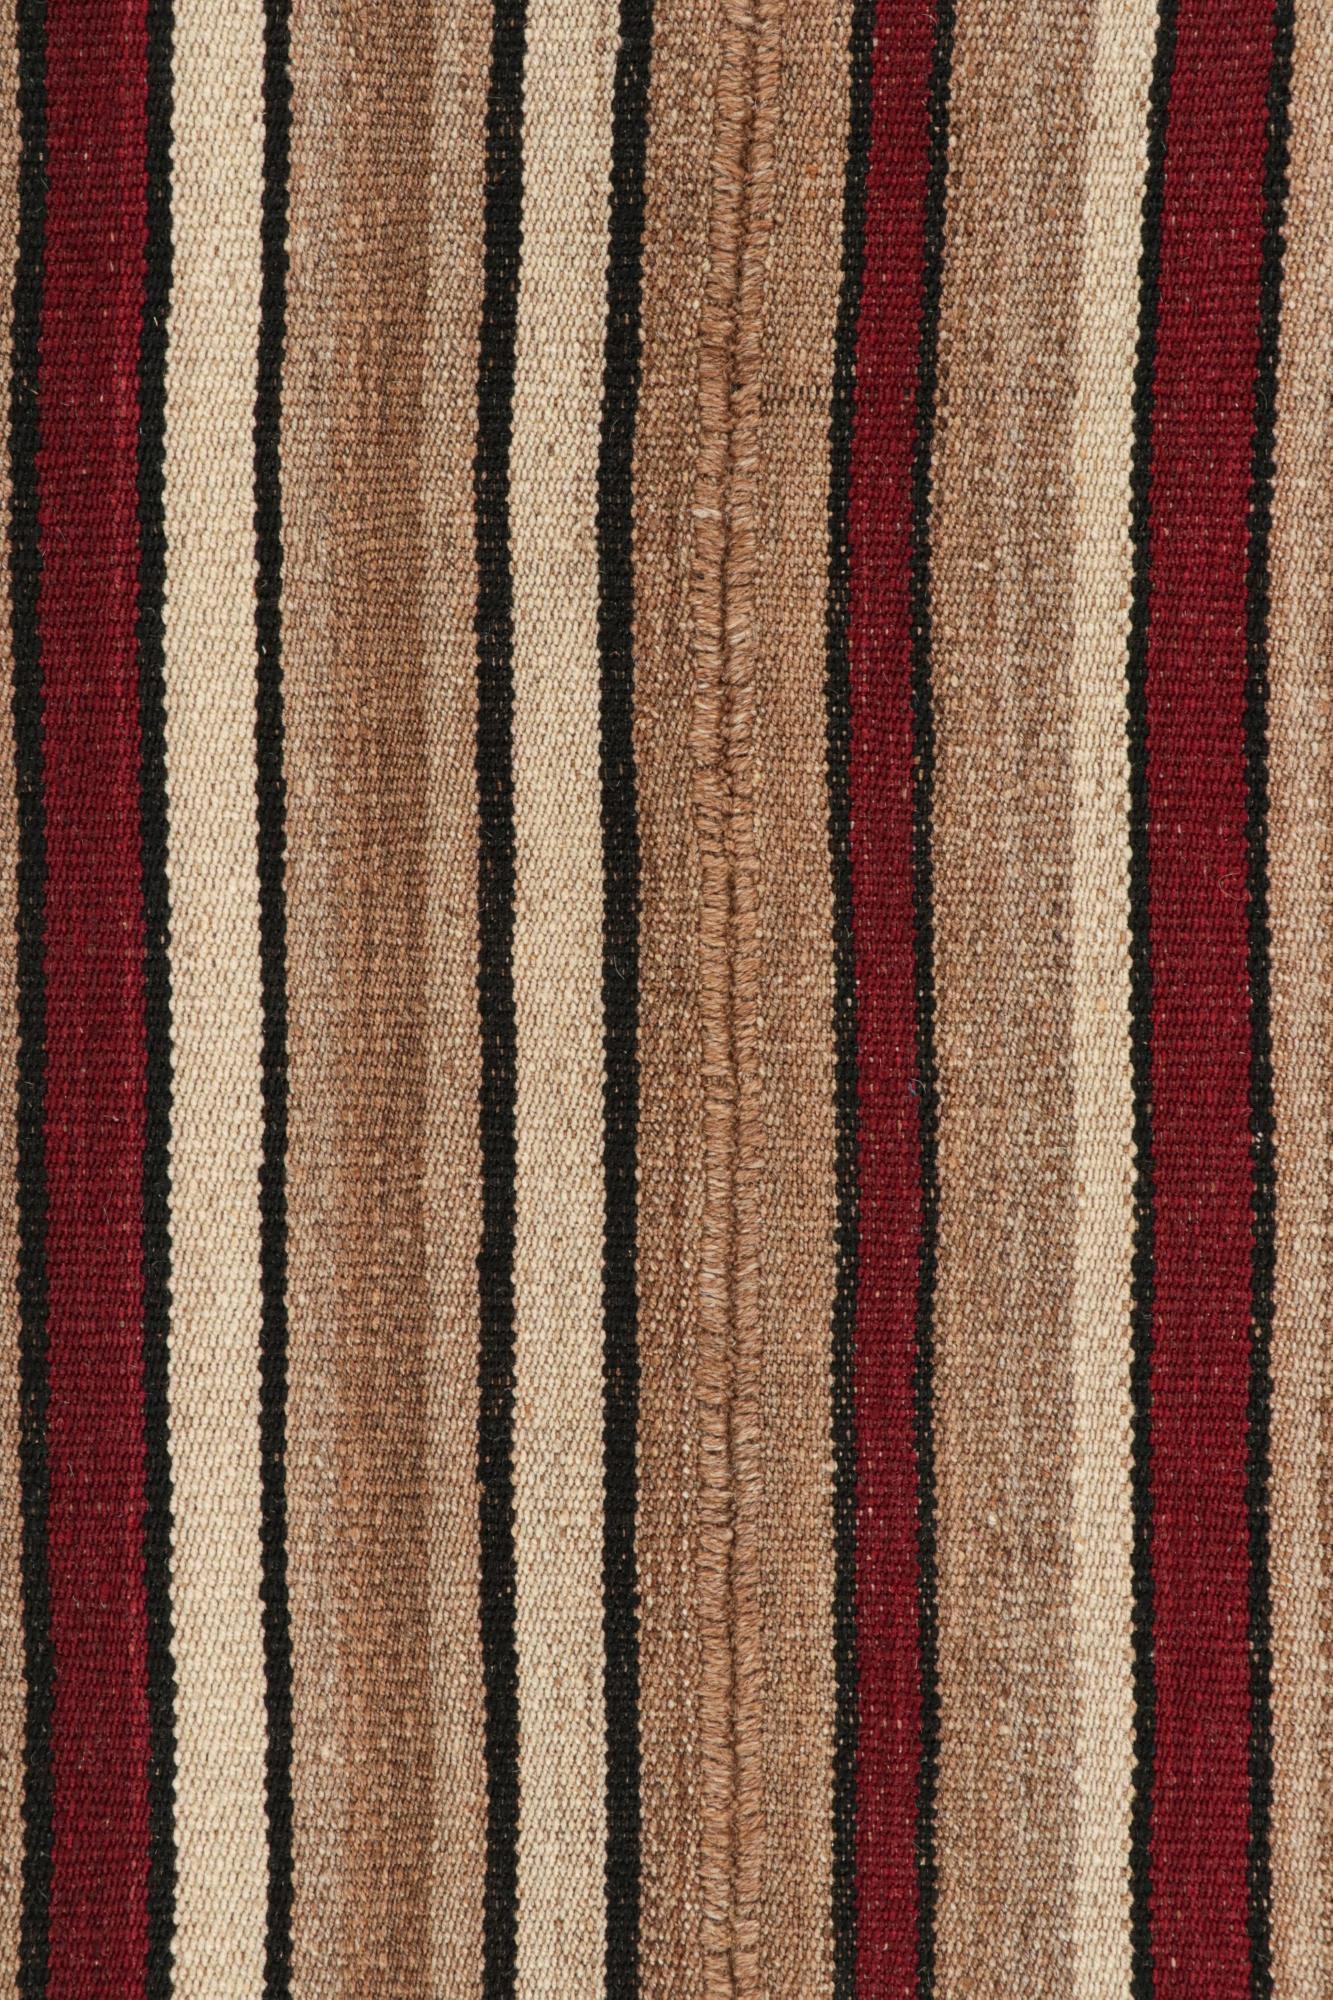 Tribal Vintage Shahsavan Palas Persian Kilim in Red, Beige-Brown Stripes For Sale